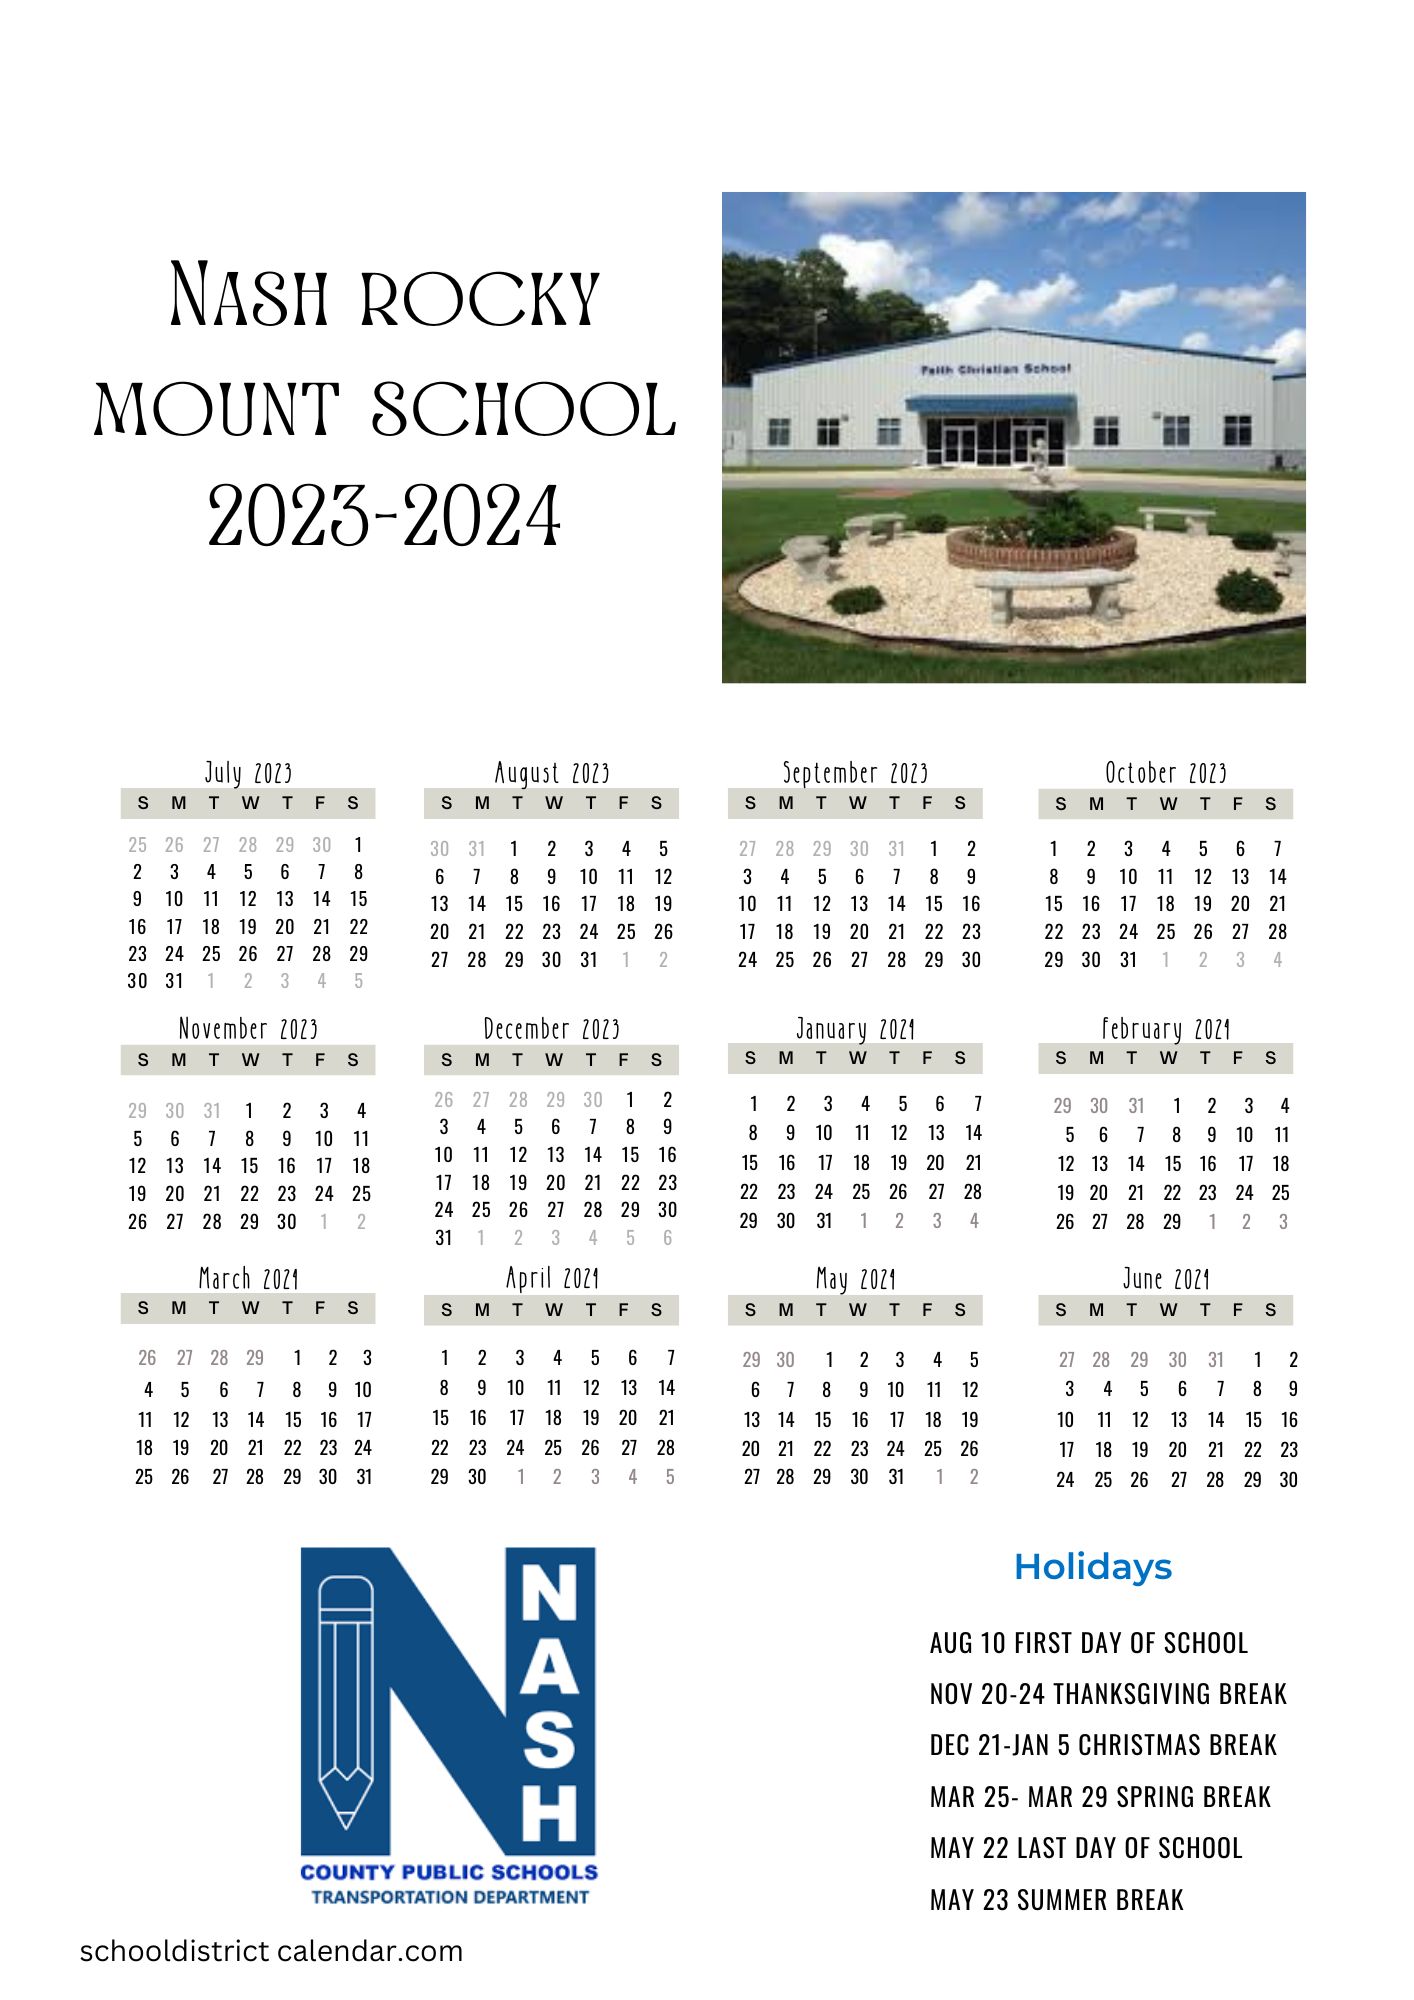 nash-rocky-mount-schools-calendar-holidays-2023-2024